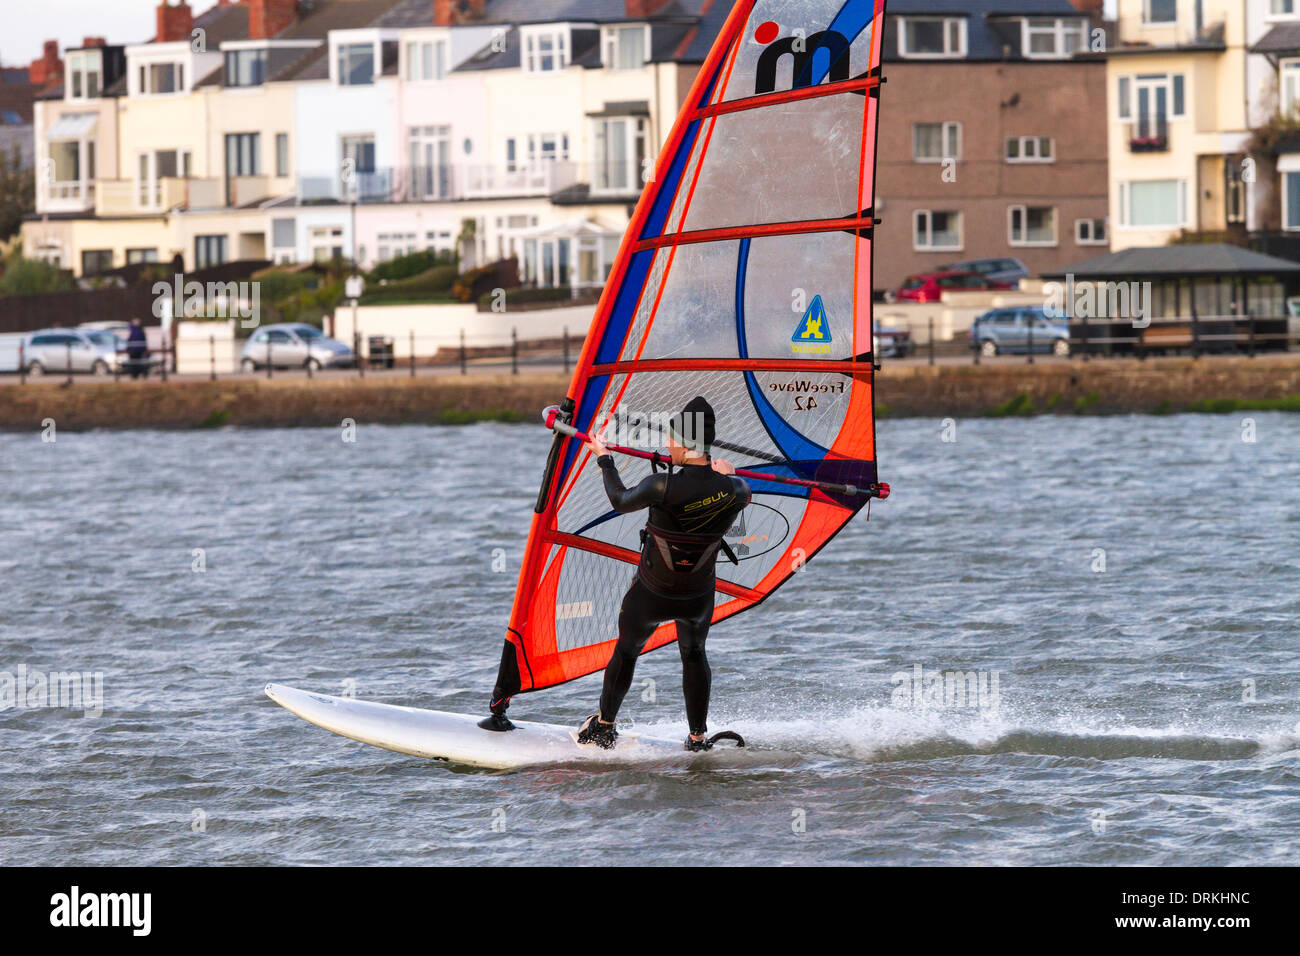 Male windsurfer sails on marine lake Stock Photo